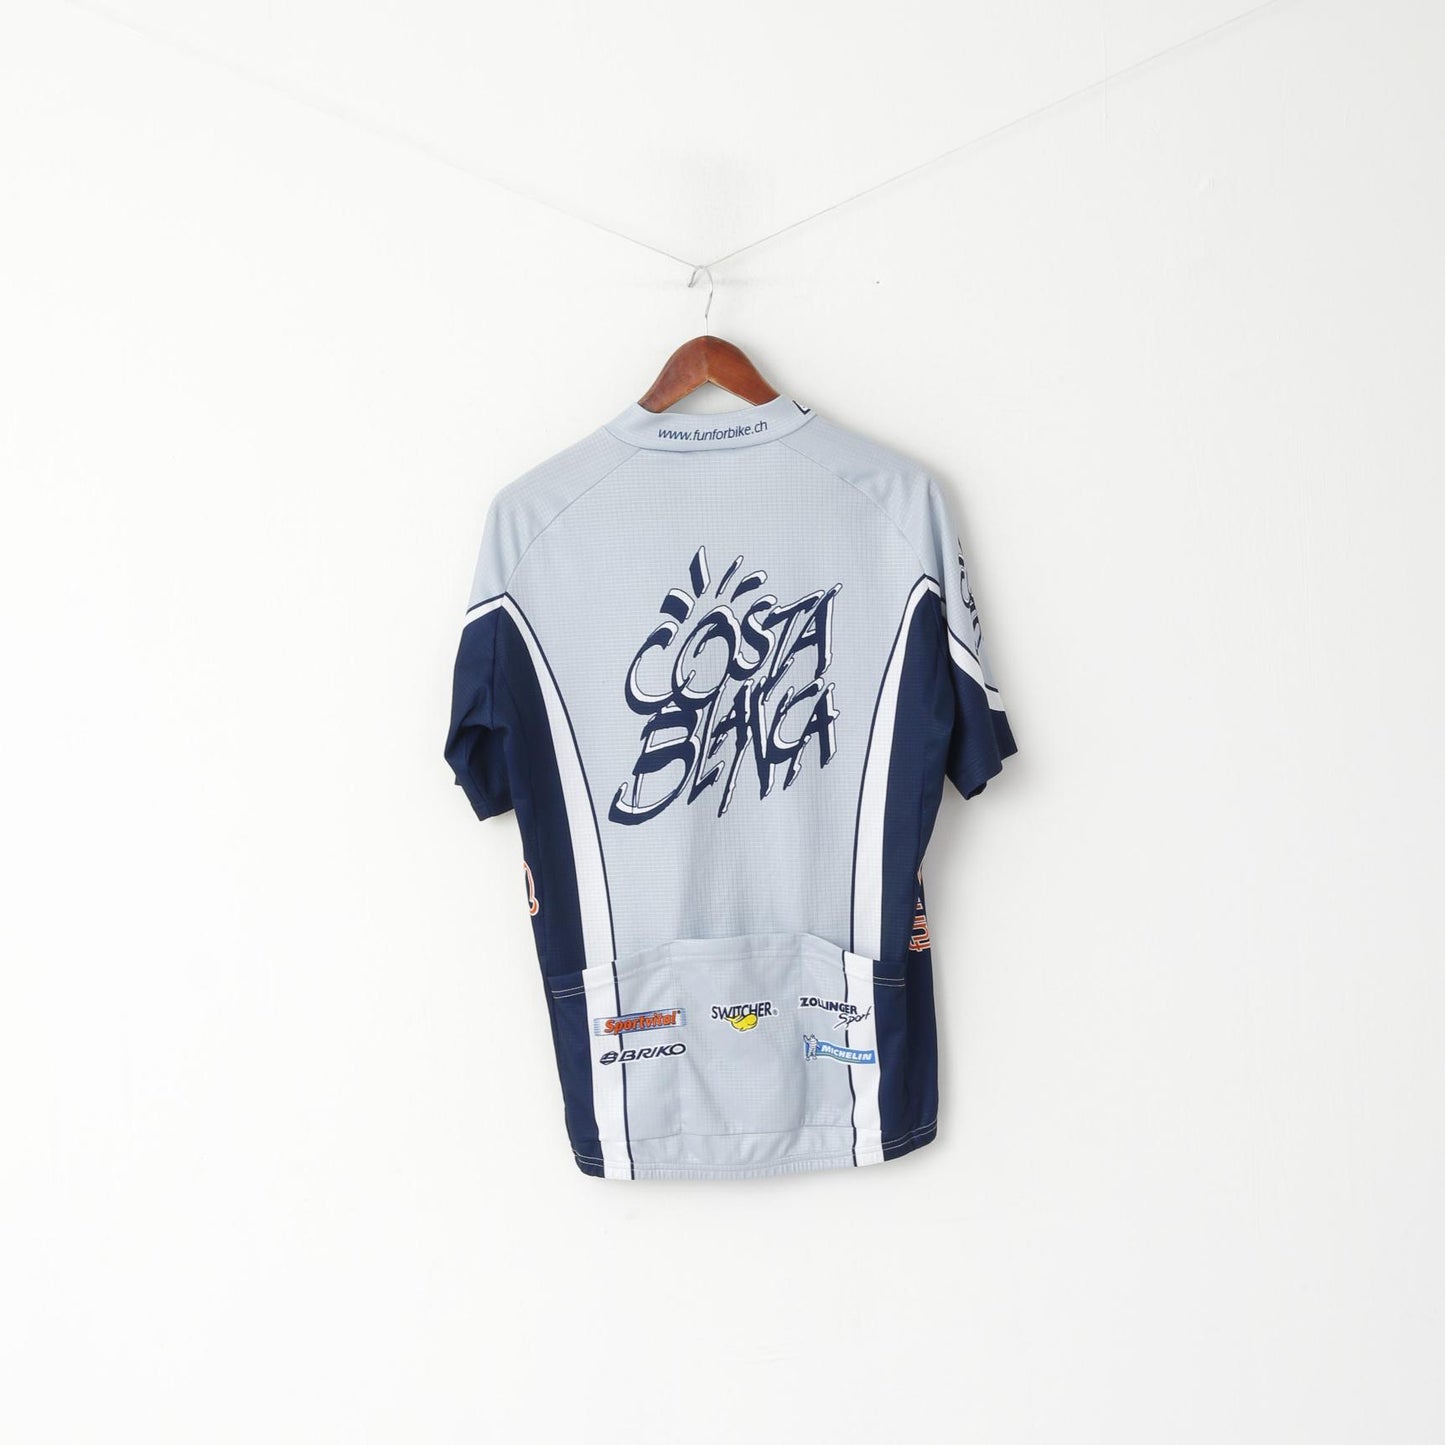 Zollinger Men XL Cycling Shirt Grey Costa Blanca Bike Zip Up Made in Italy Jersey Top